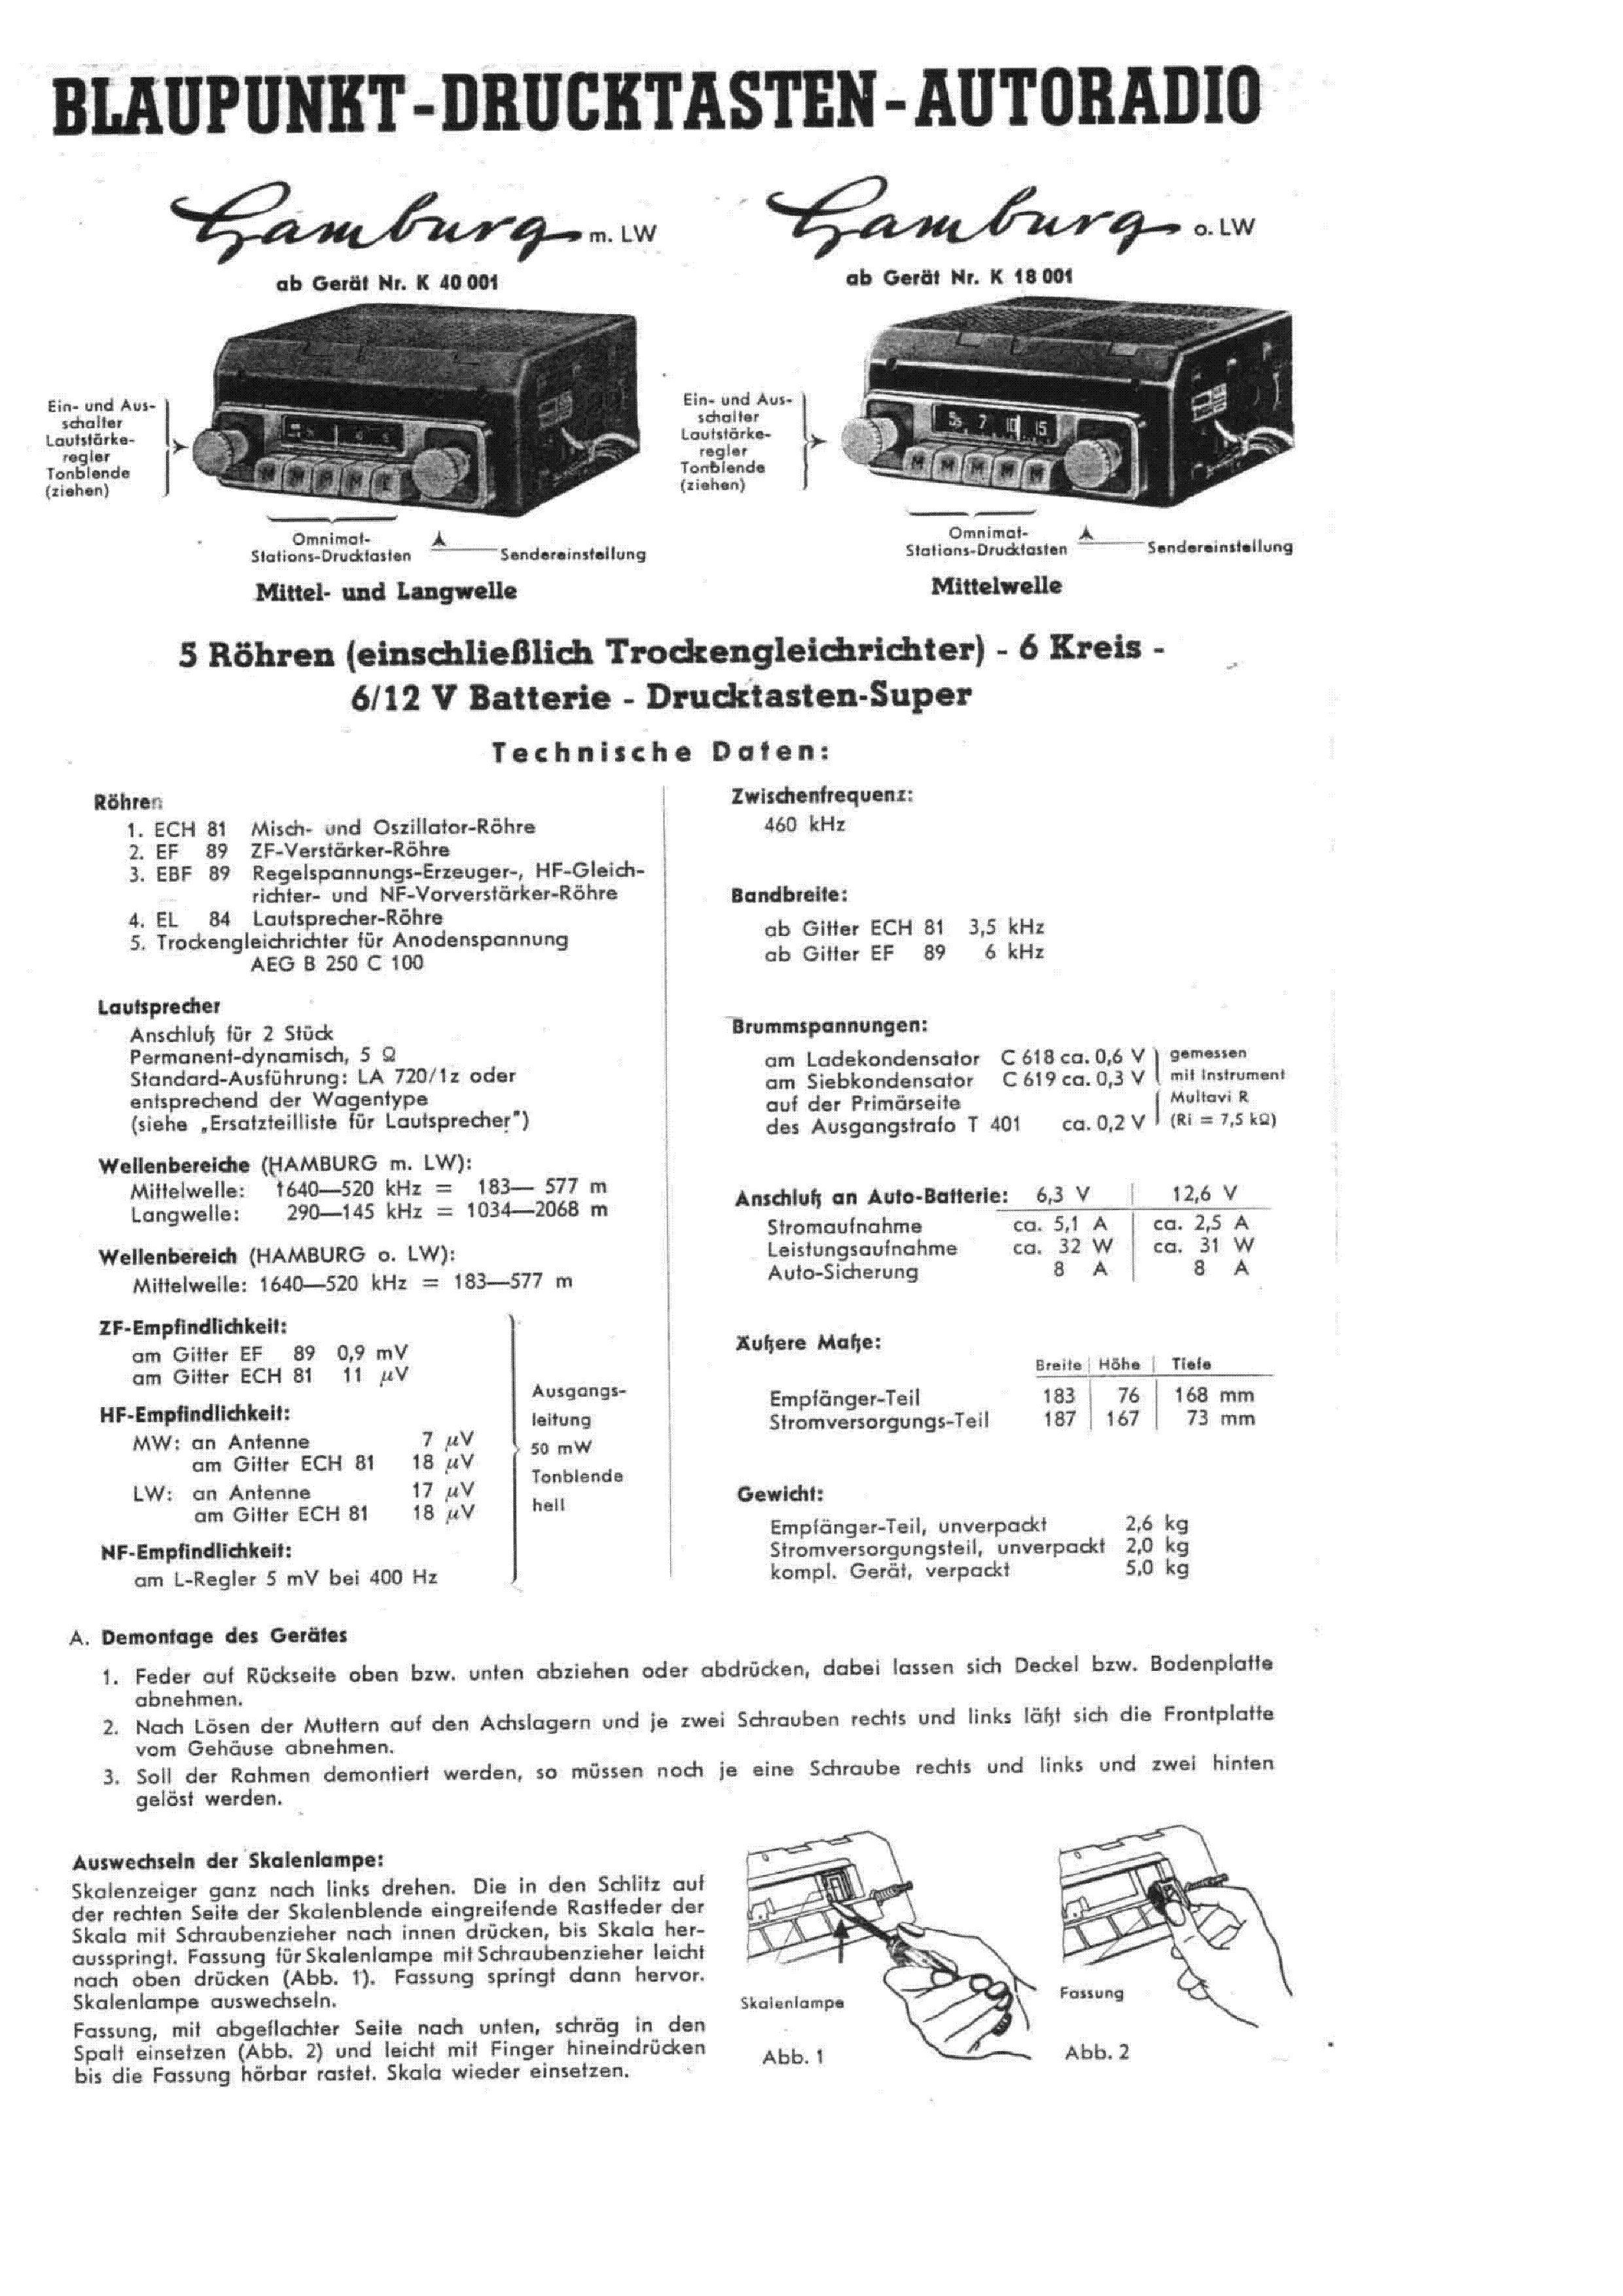 BLAUPUNKT BRAMBURG service manual (1st page)